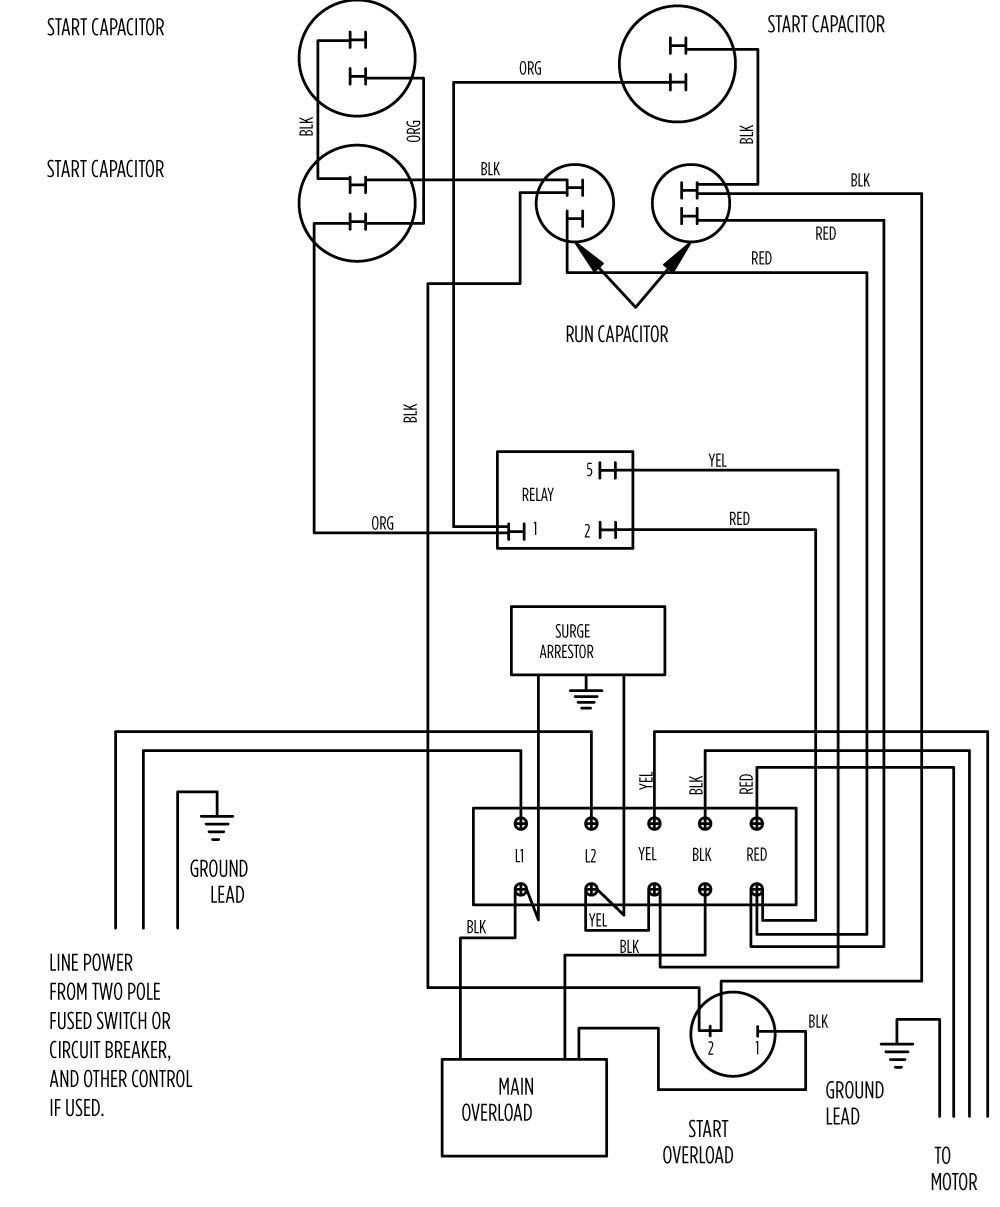 Baldor Motor Capacitor Wiring Diagram Single Phase Diagrams Jpg on simple electric motor diagram